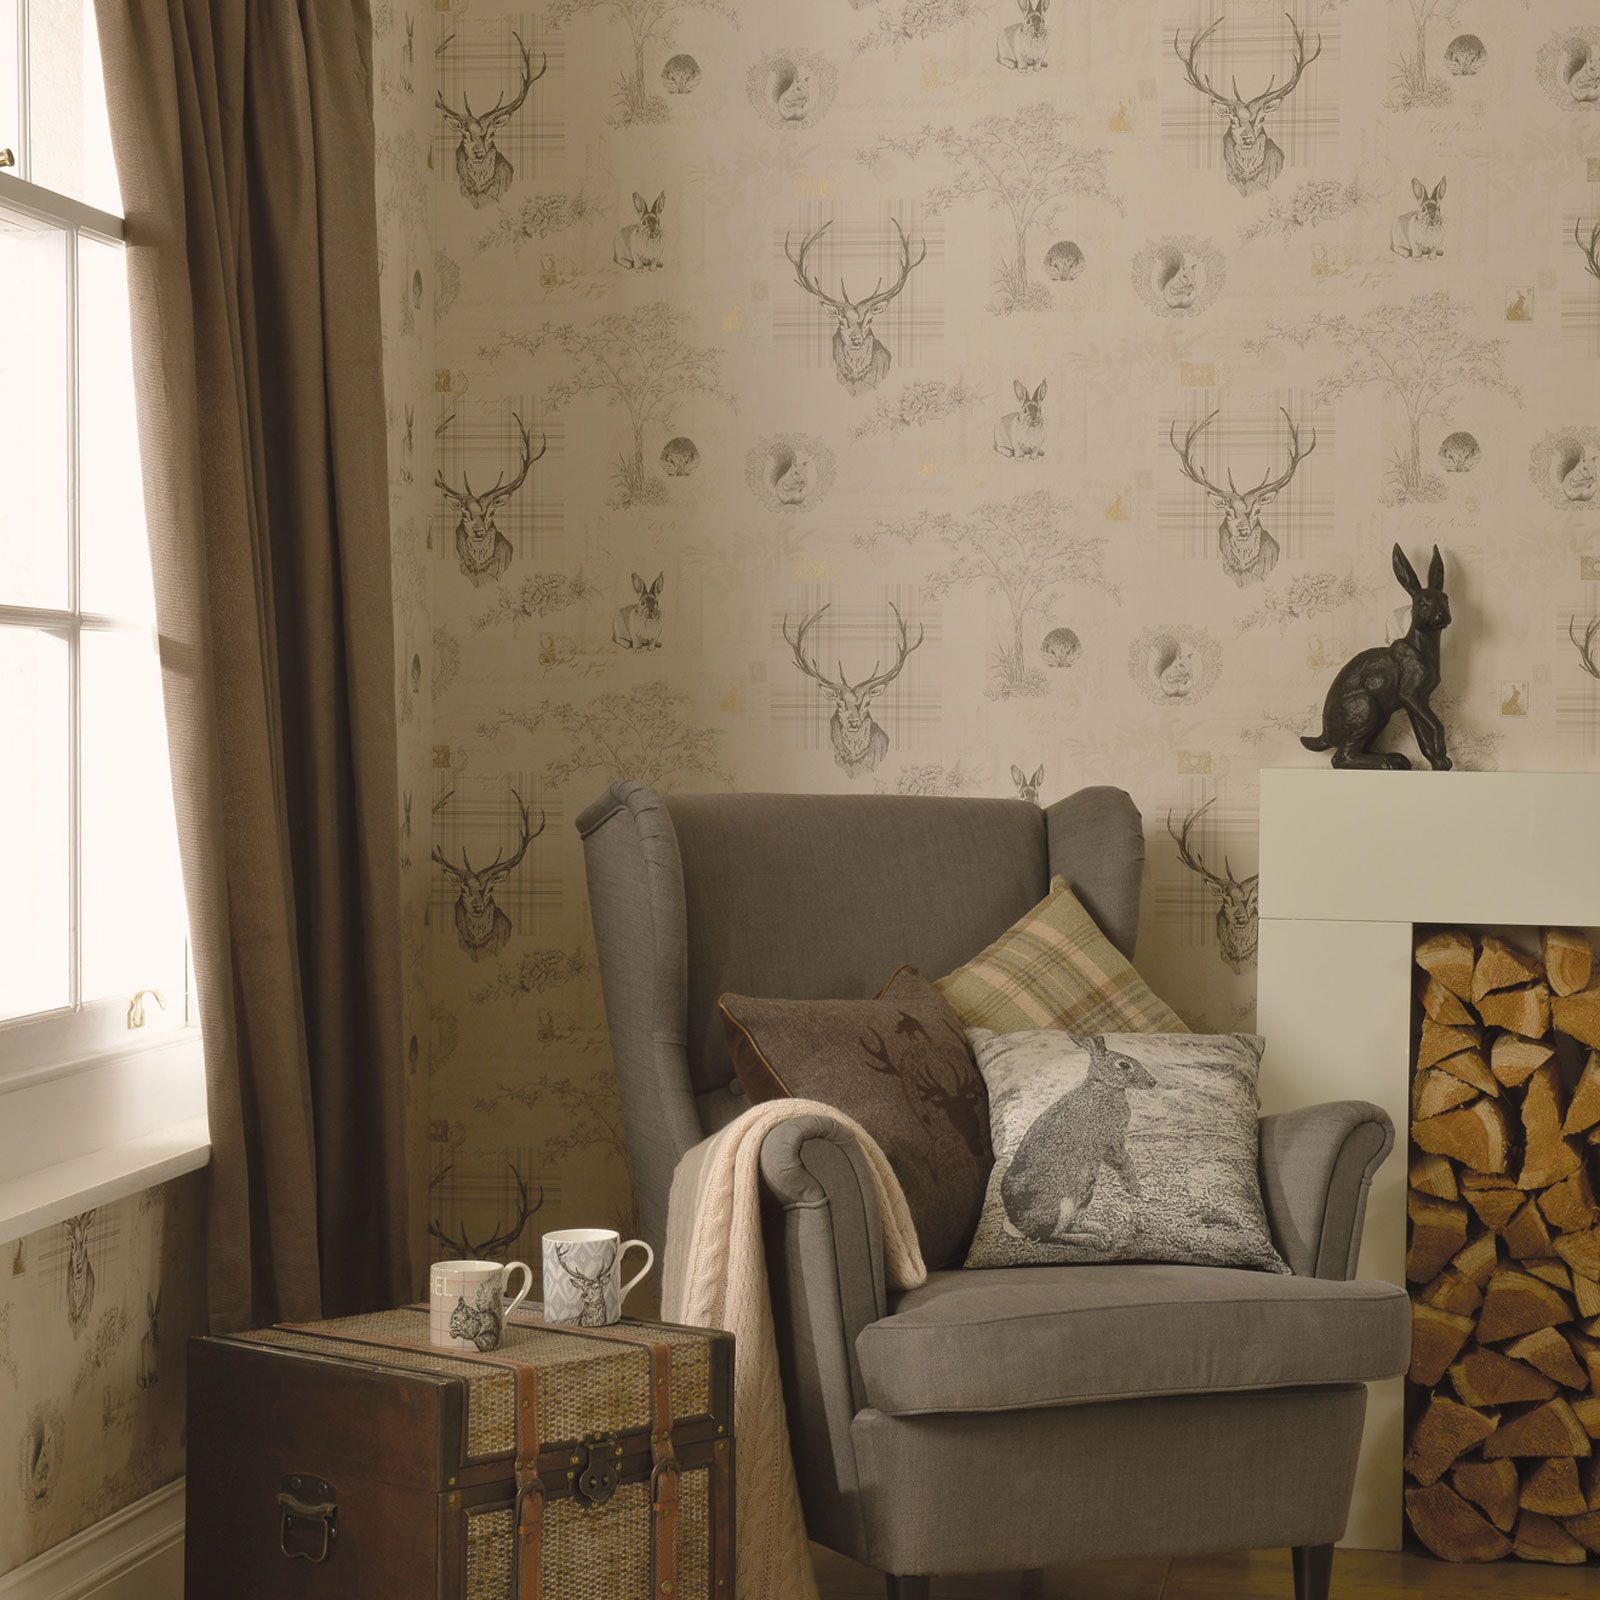 stag wallpaper,wall,room,wallpaper,interior design,curtain